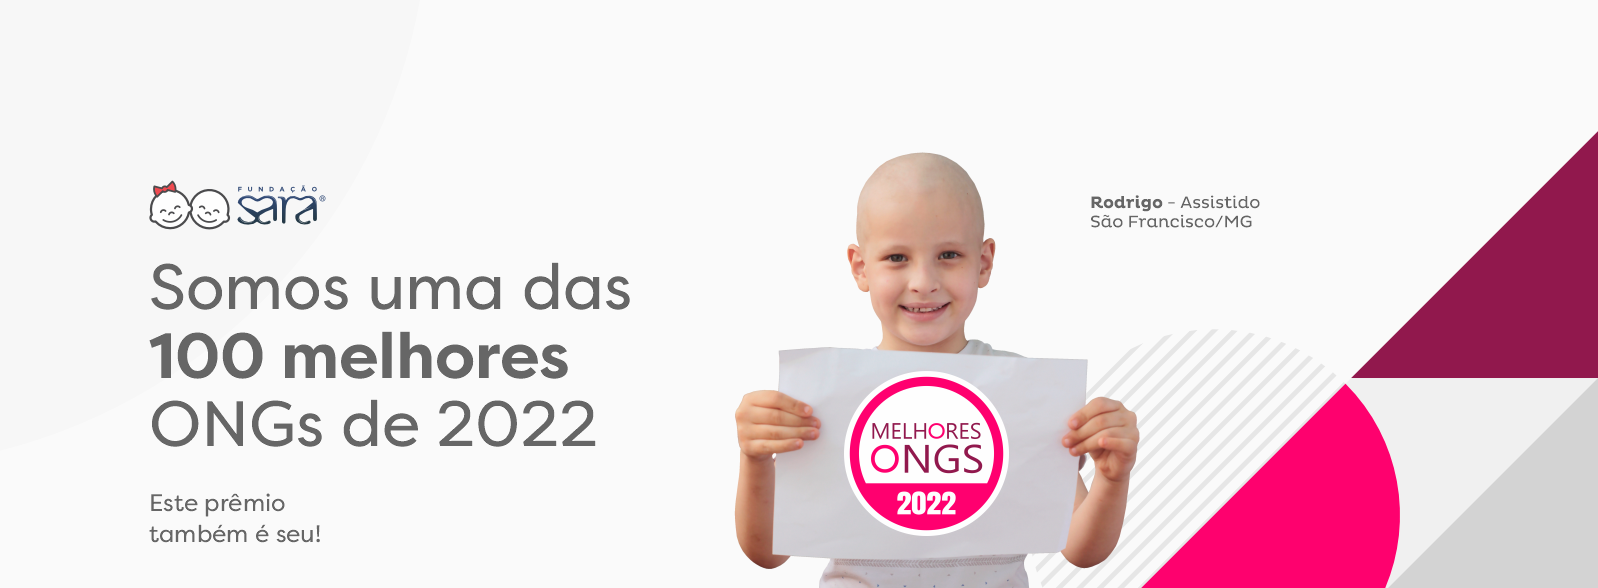 Banner Melhores ONGS 2022